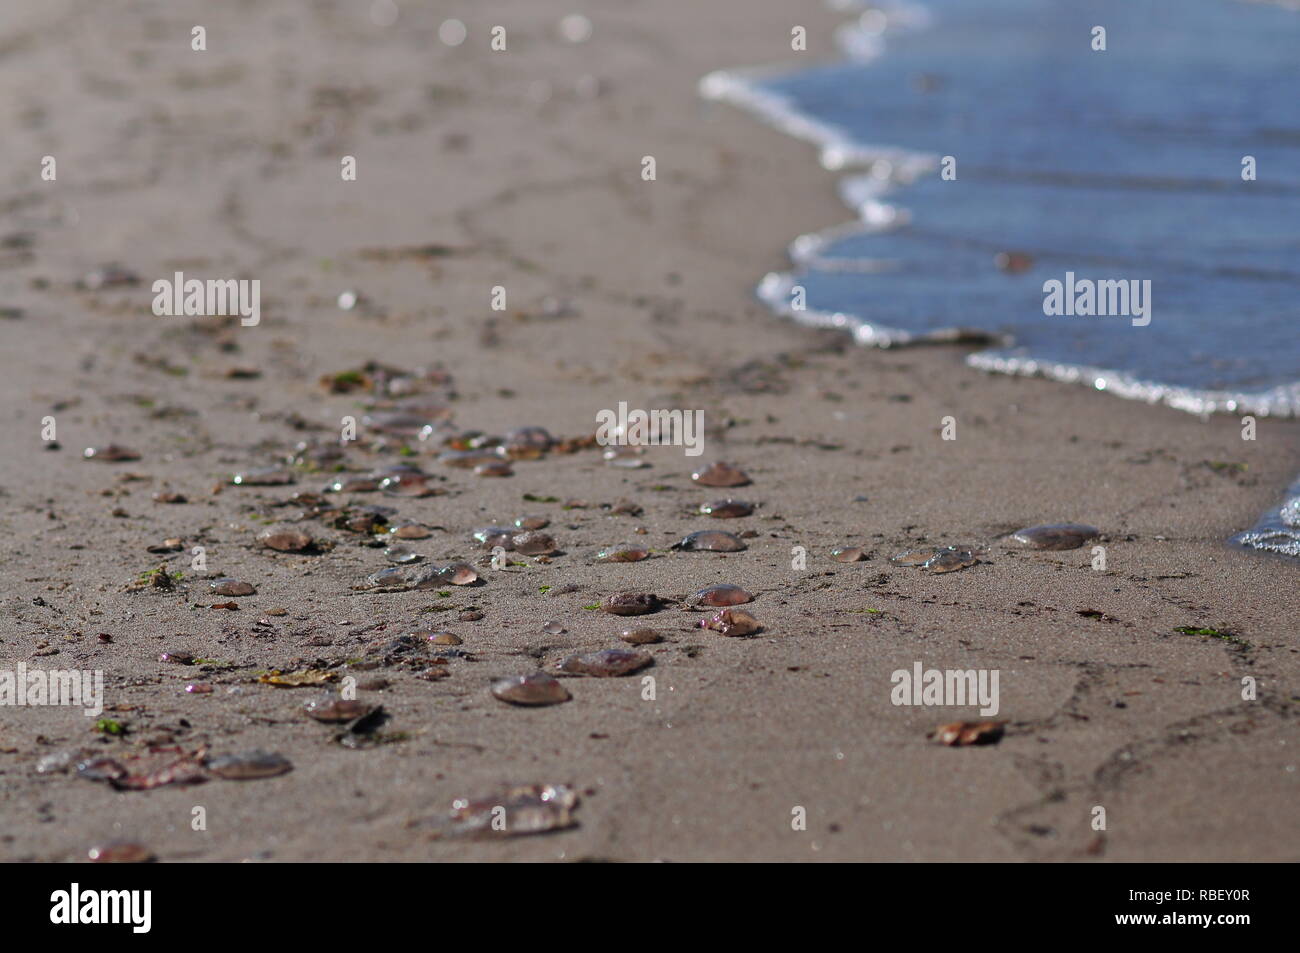 Gruppo di Aurelia aurita (comune meduse, luna meduse, moon jelly, saucer jelly) giacente sulla spiaggia Foto Stock